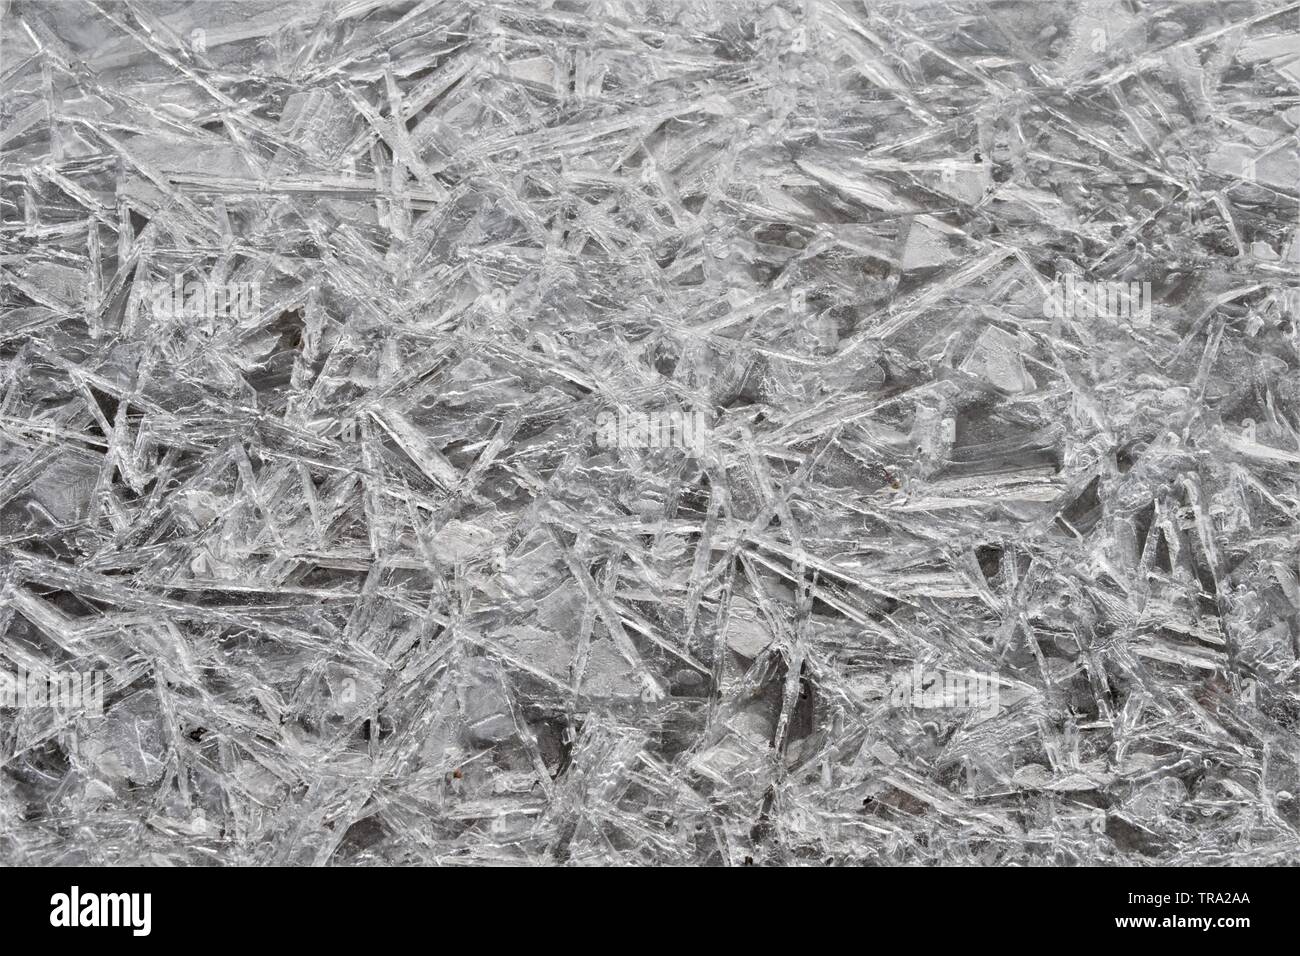 Texture of ice, frozen Han River at Dumulmeori, Yangpyeong, Korea Stock Photo